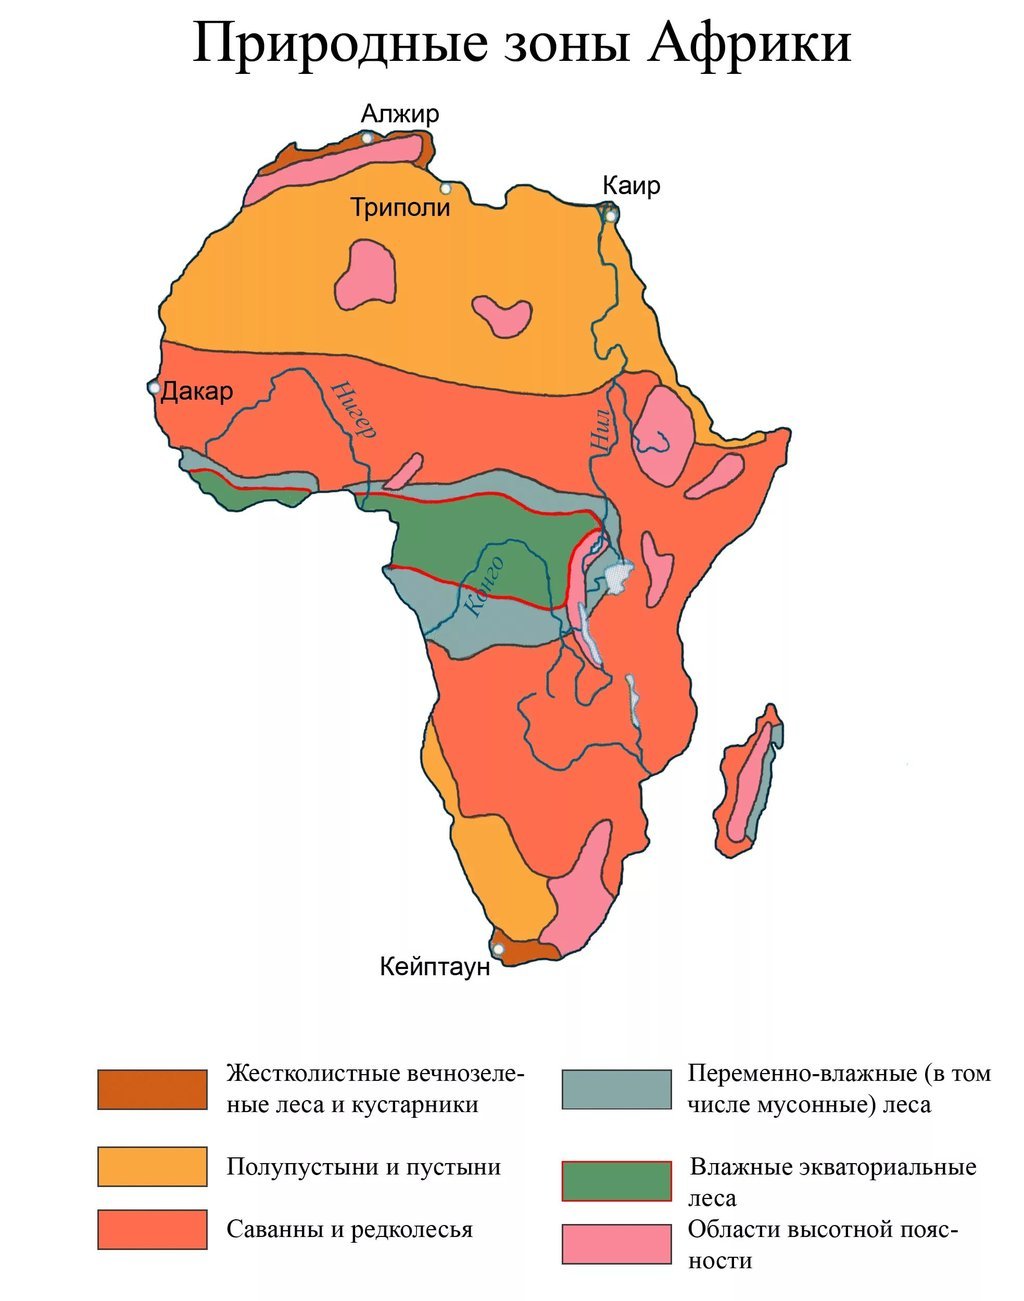 5 природных зон африки. Карта природных зон Африки. Карта климатических зон Африки. Природная зона тропического пояса Африки. Зона саванн и редколесий в Африке на карте.